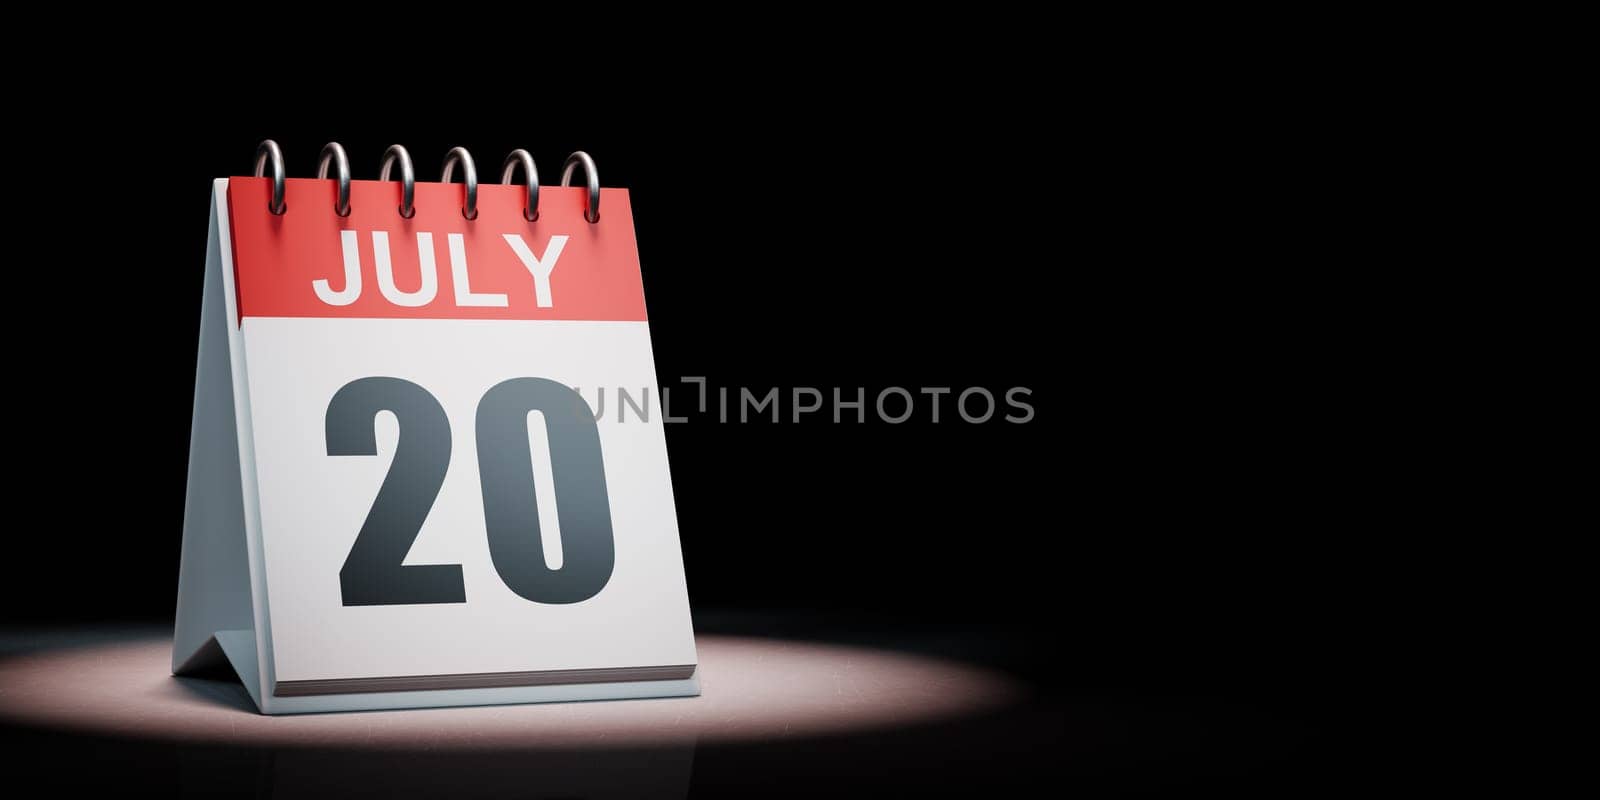 July 20 Calendar Spotlighted on Black Background by make